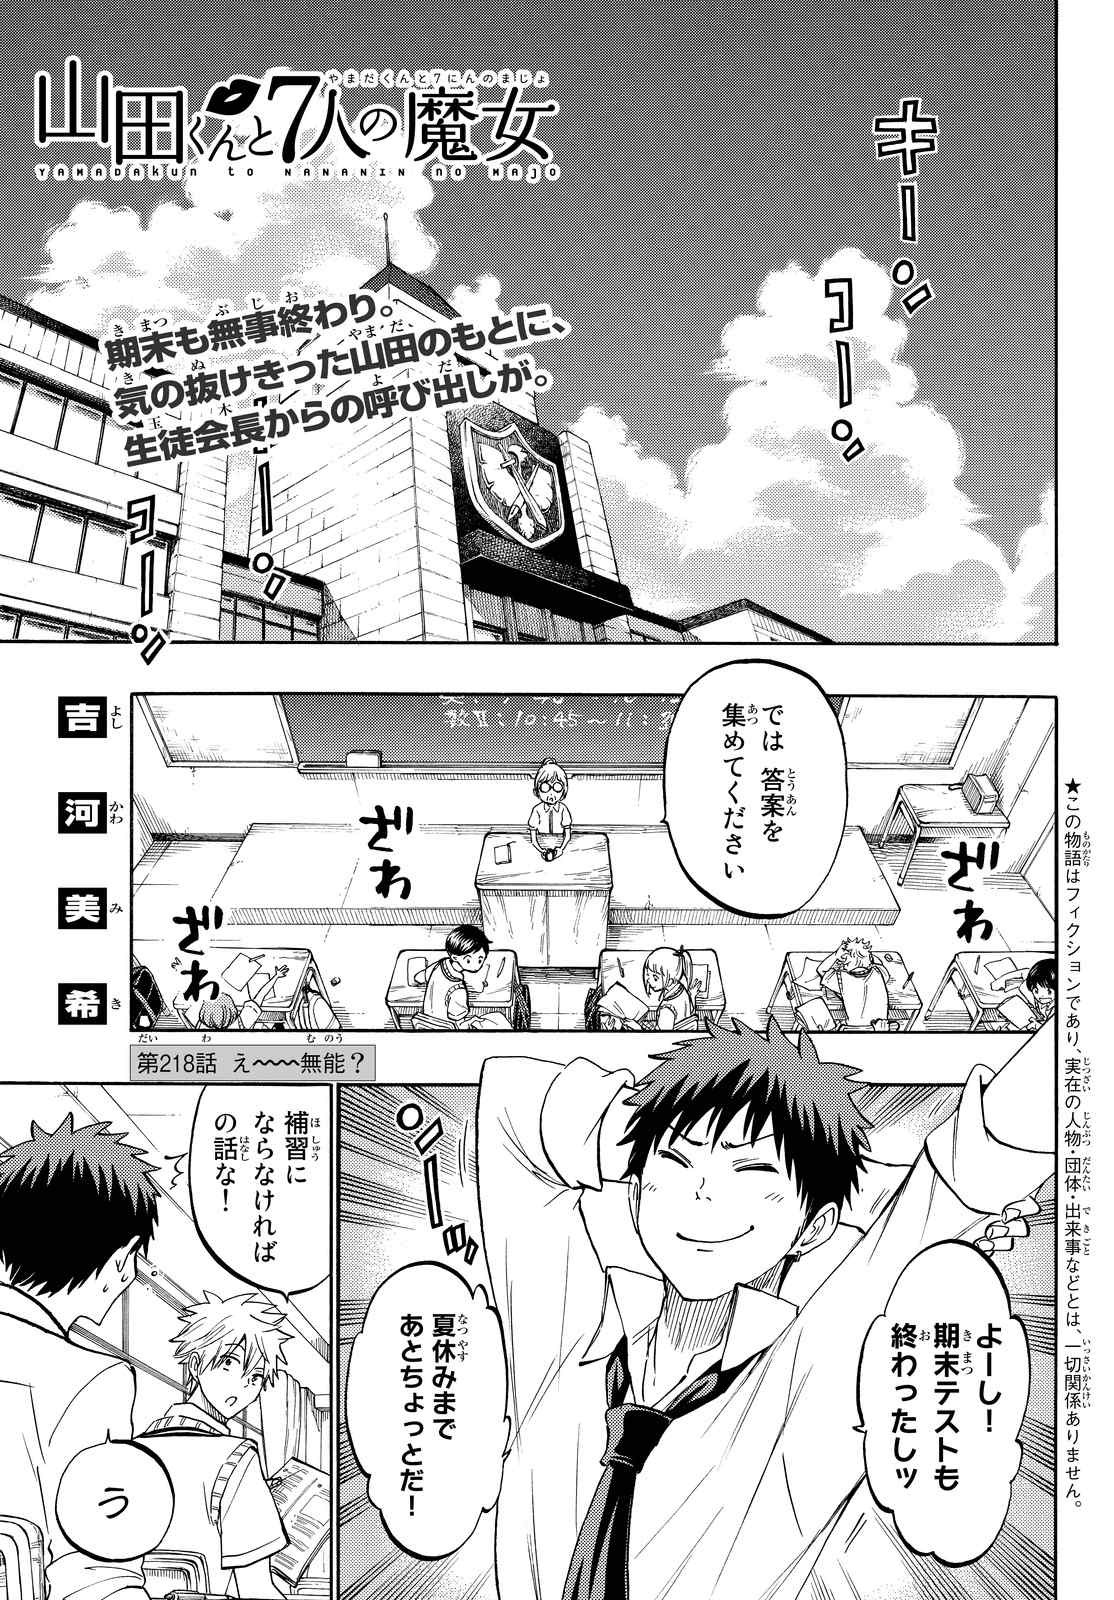 Yamada-kun to 7-nin no Majo - Chapter 218 - Page 2